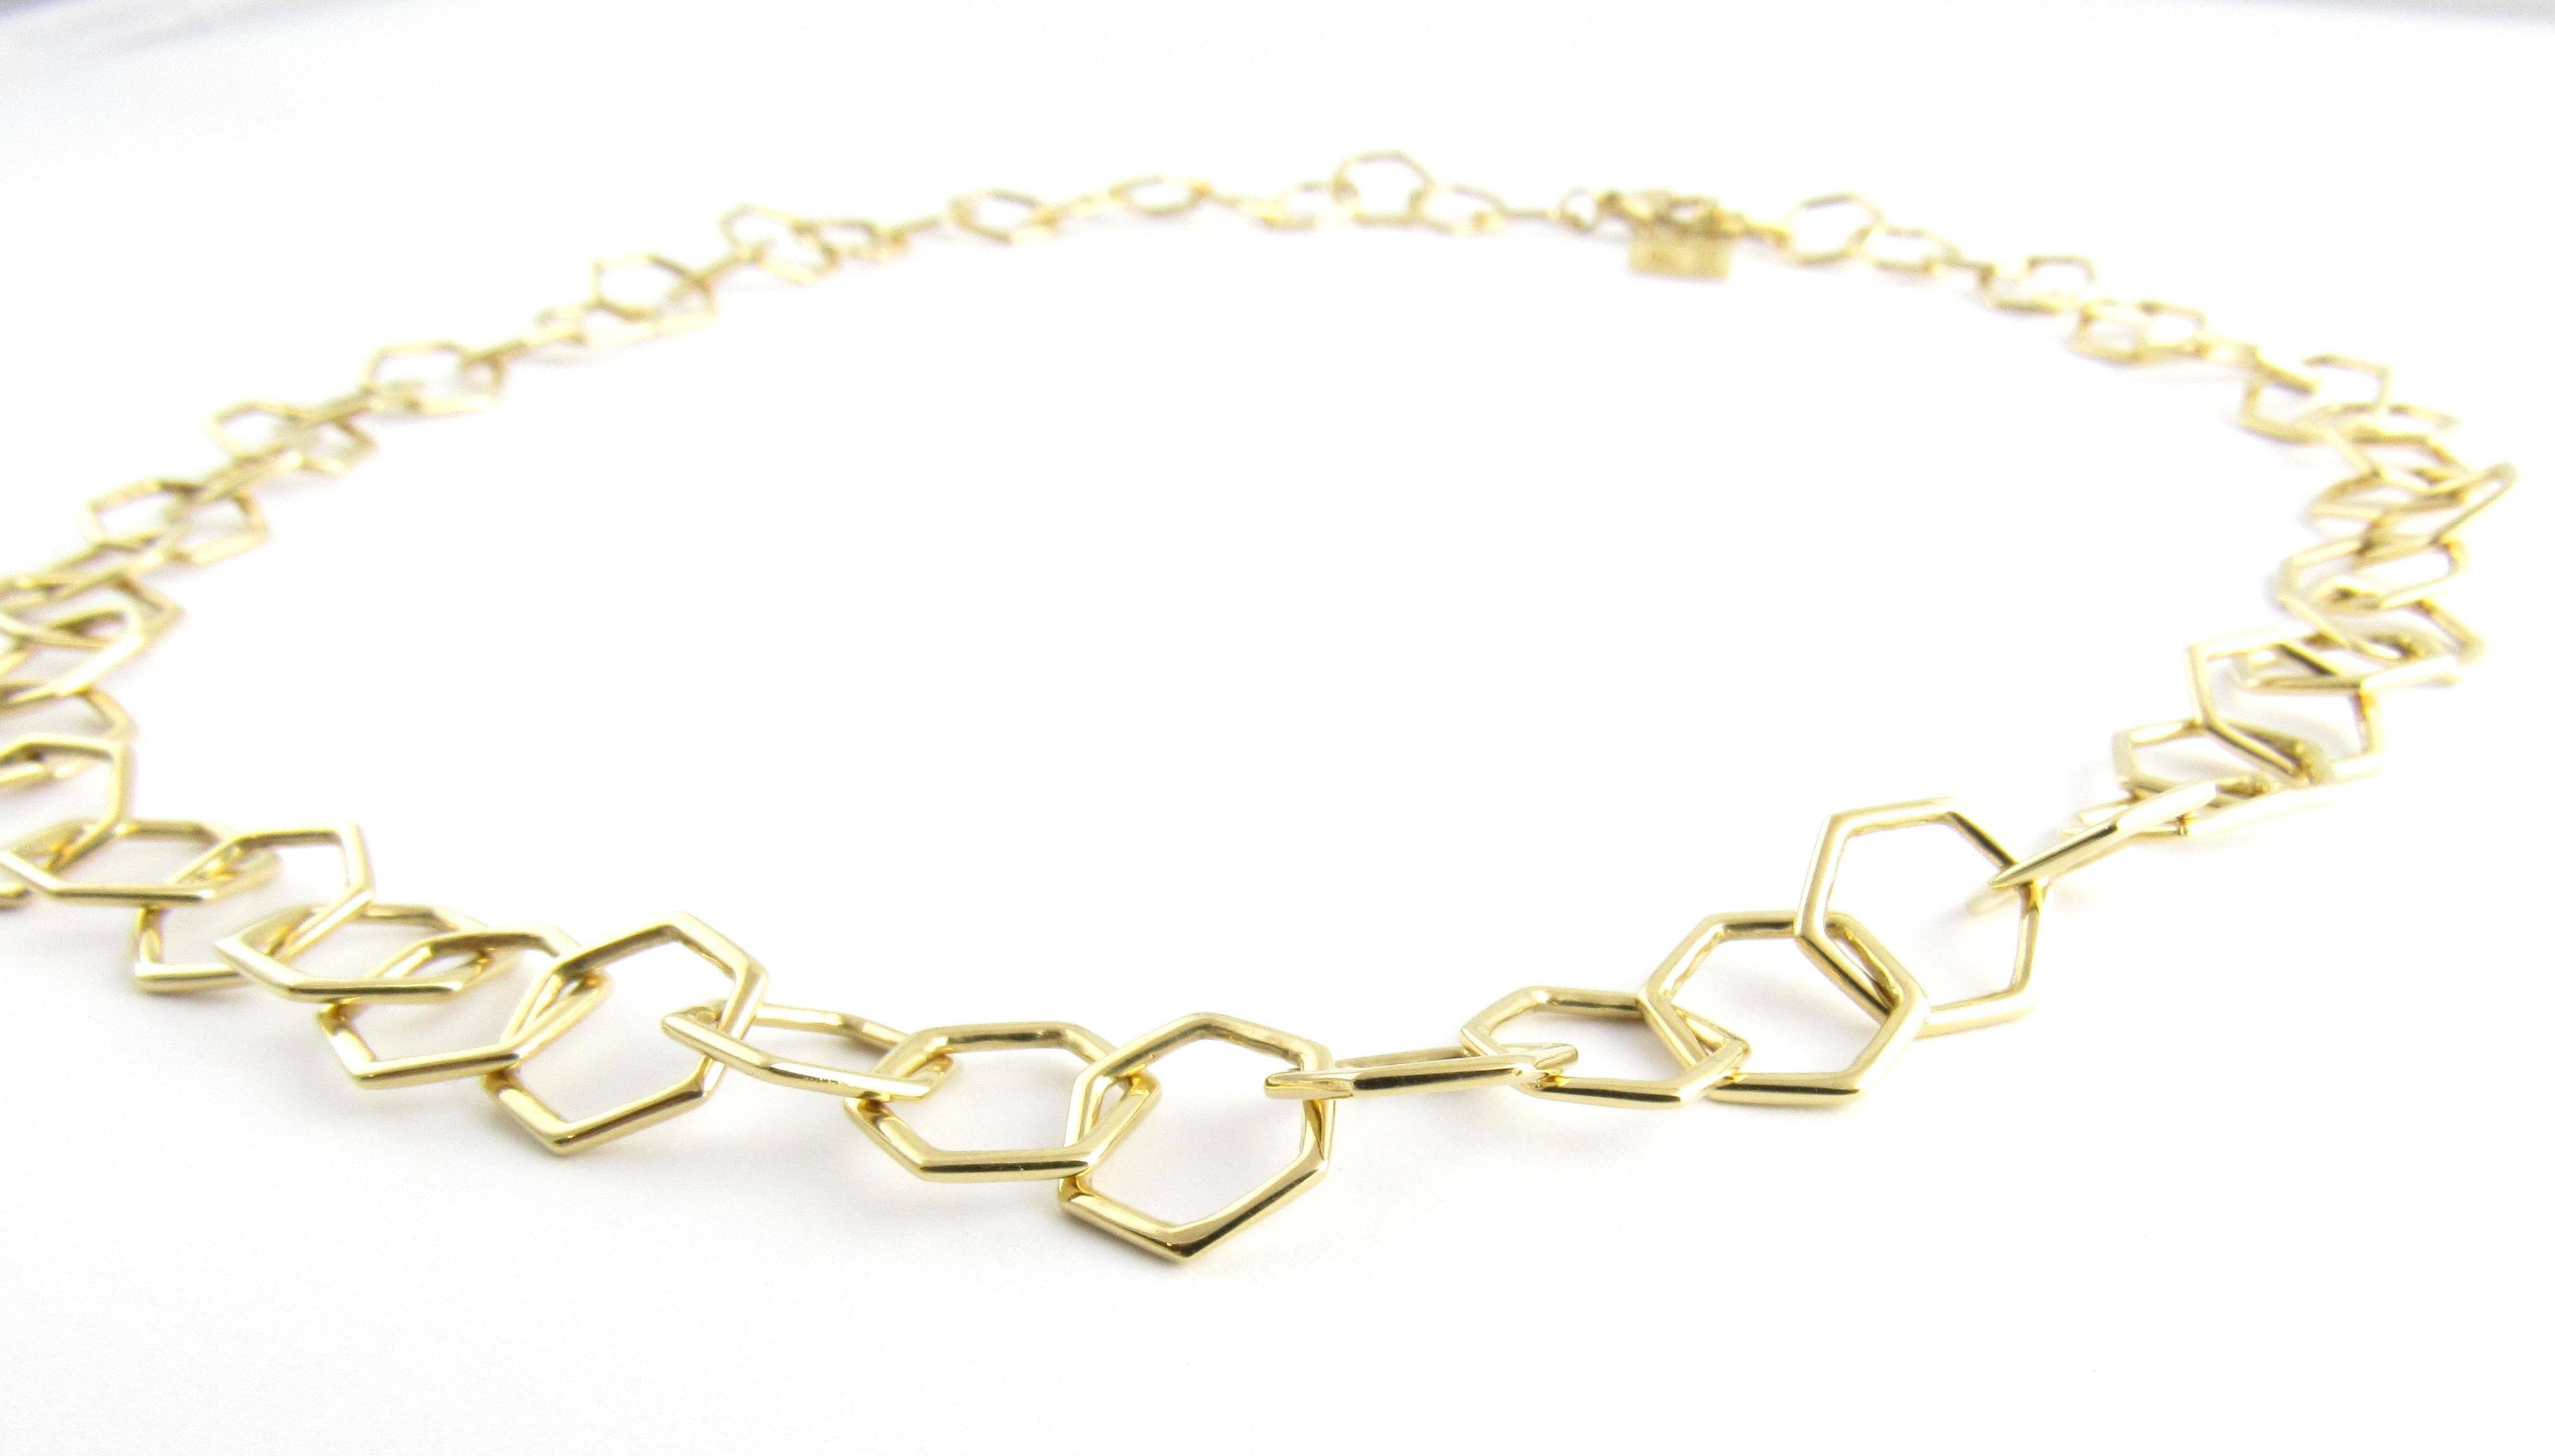 300g gold chain